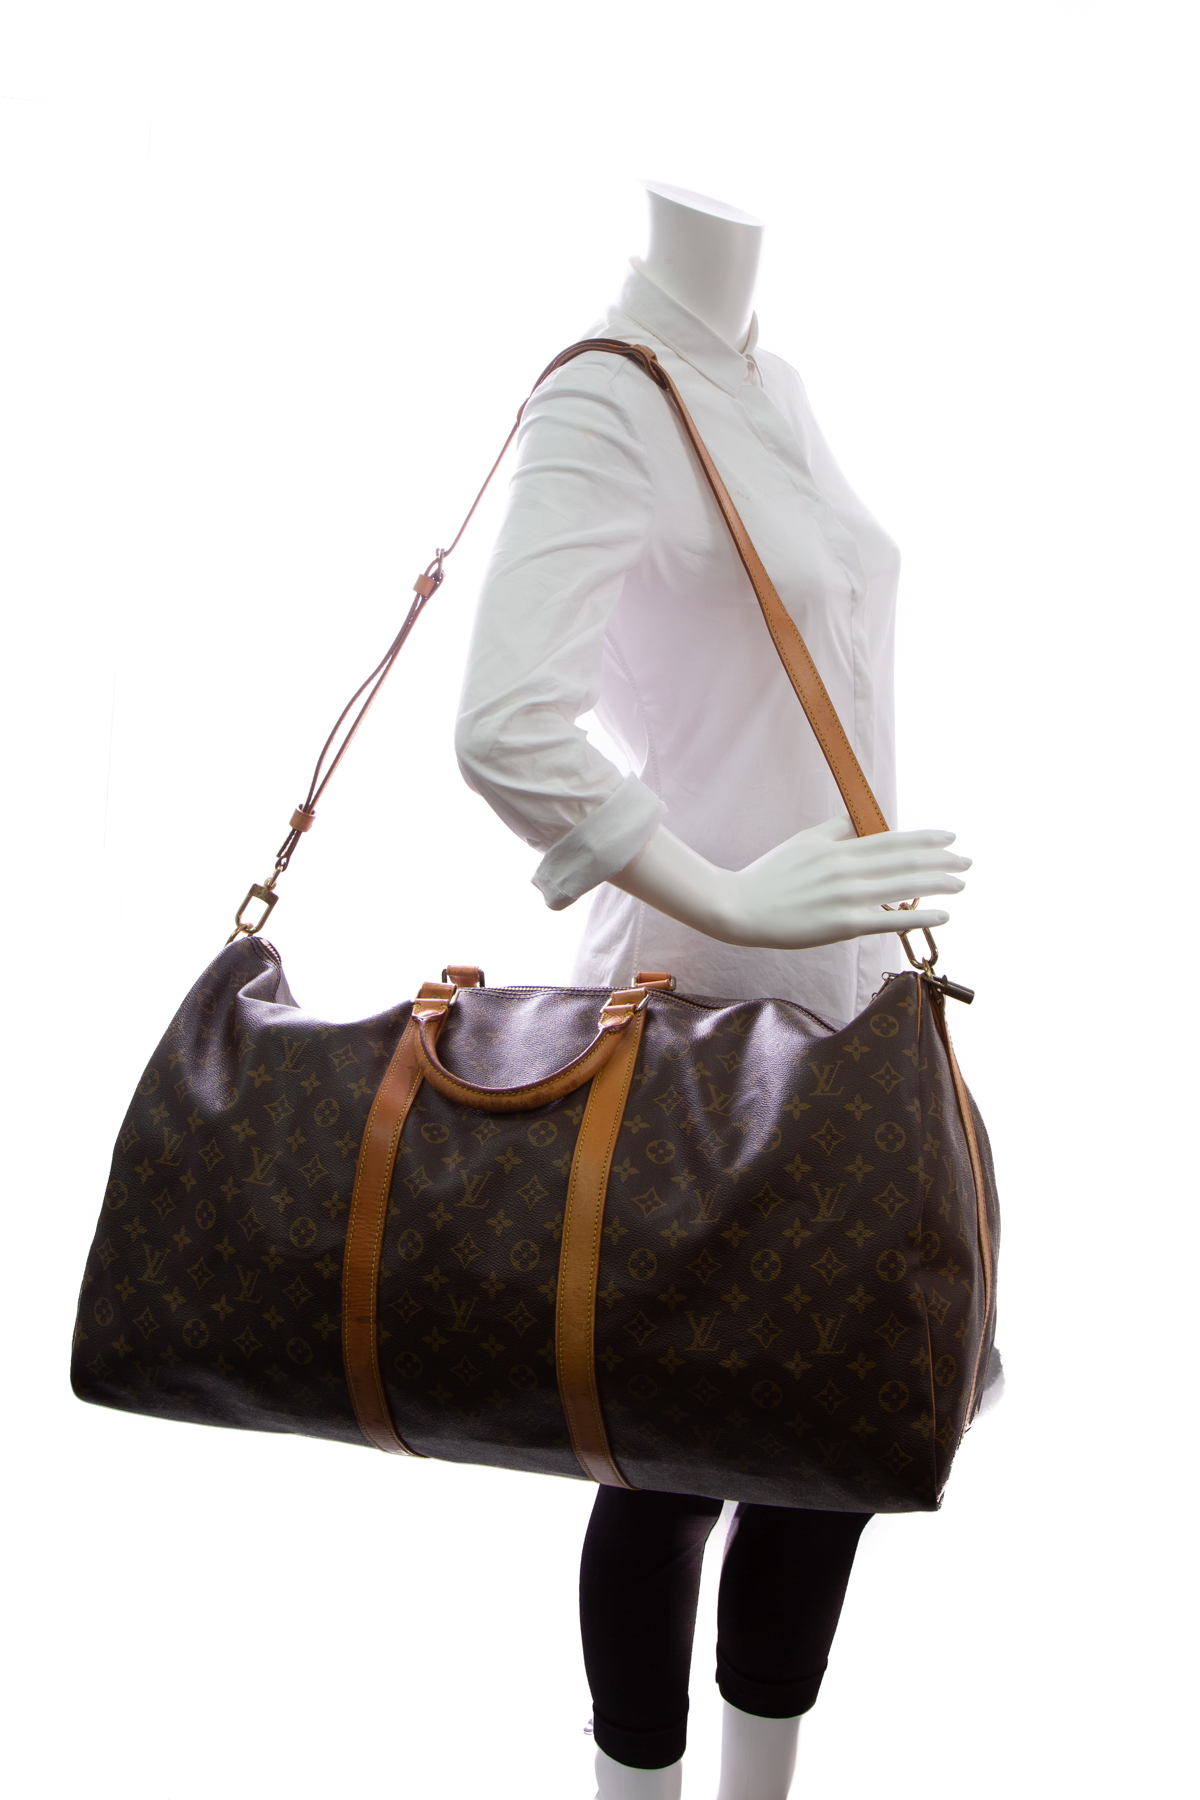 Vintage Louis Vuitton Keepall Bandouliere 60 Boston Travel Bag